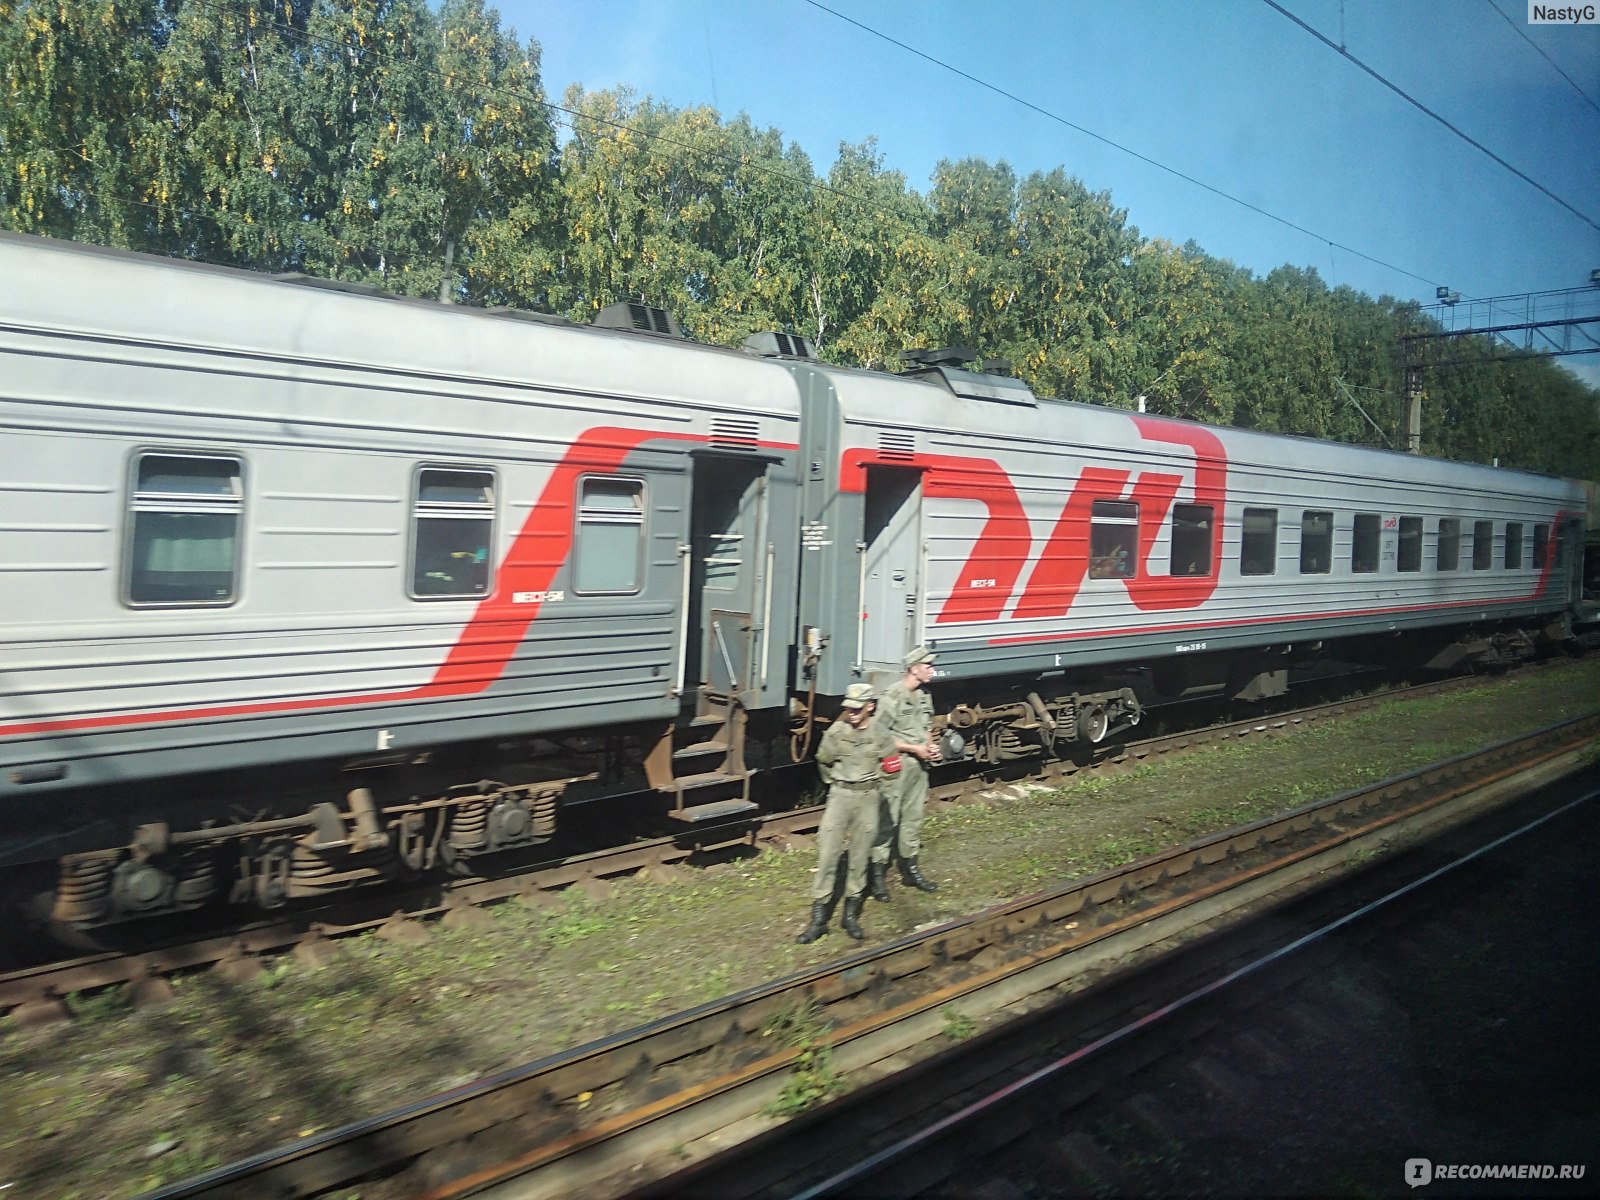 Поезд 100 москва владивосток